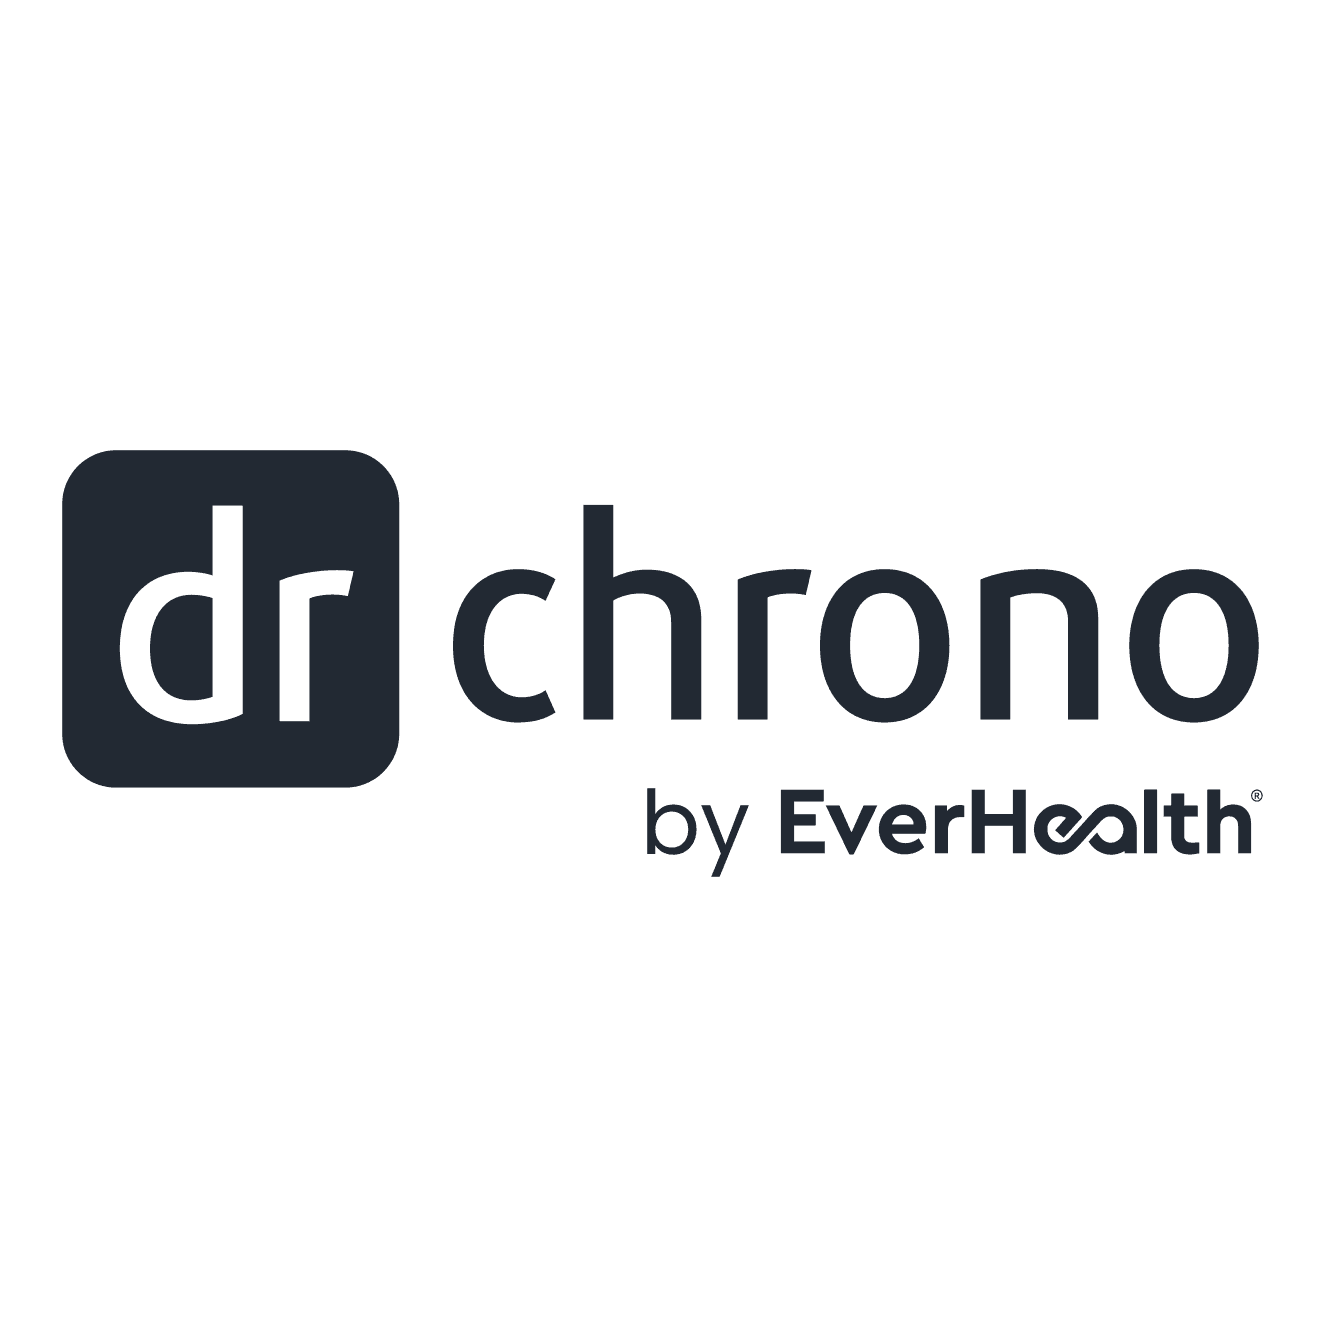 Dr. Chrono logo